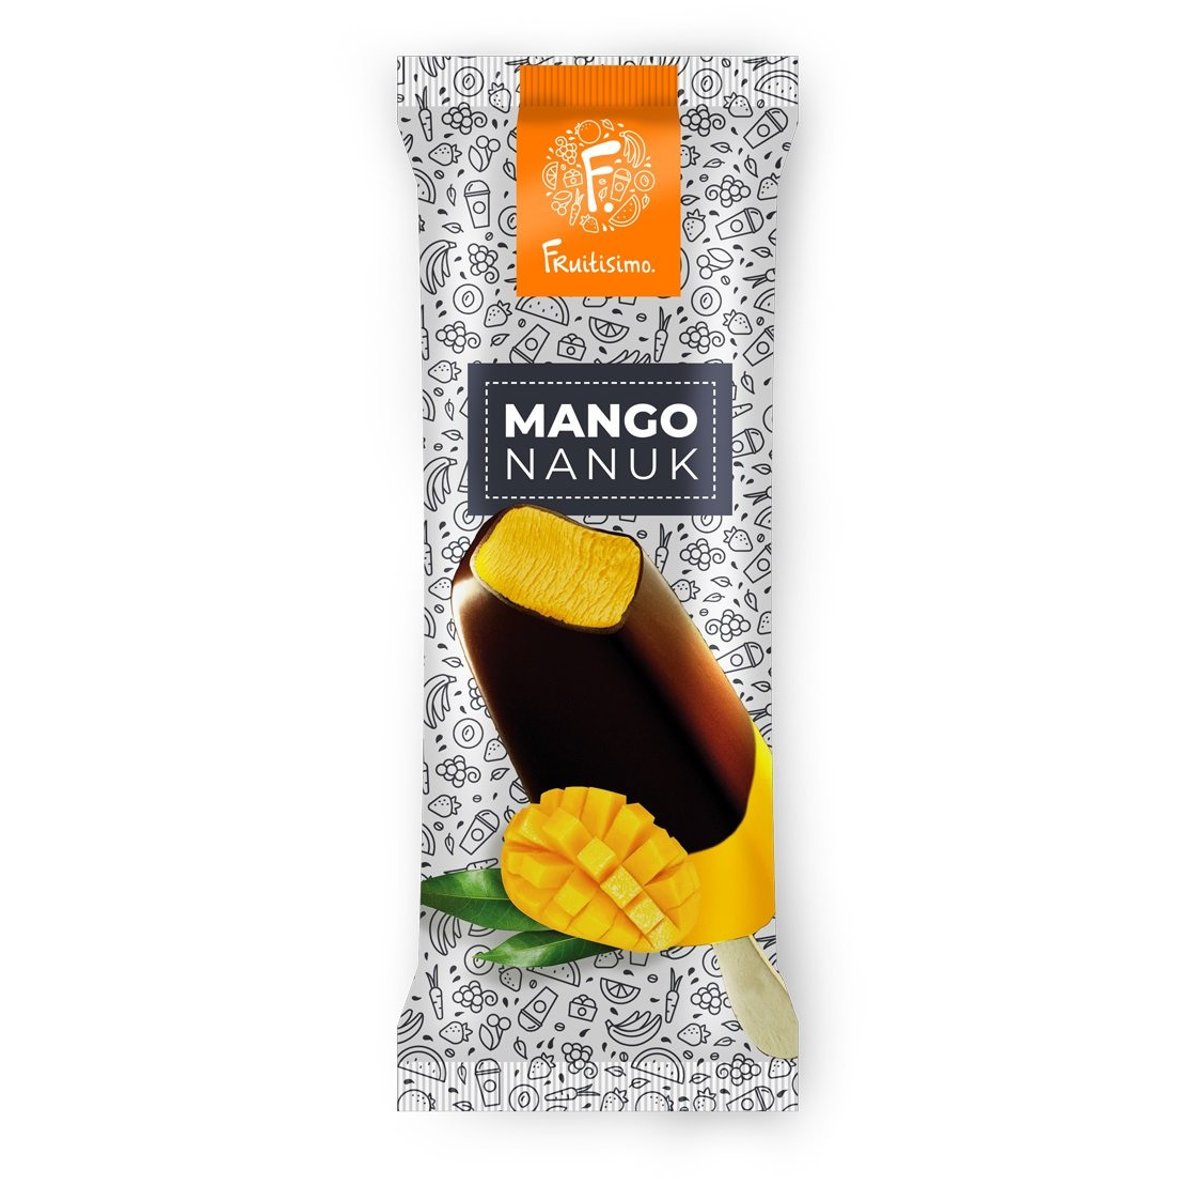 Fruitisimo Mango nanuk